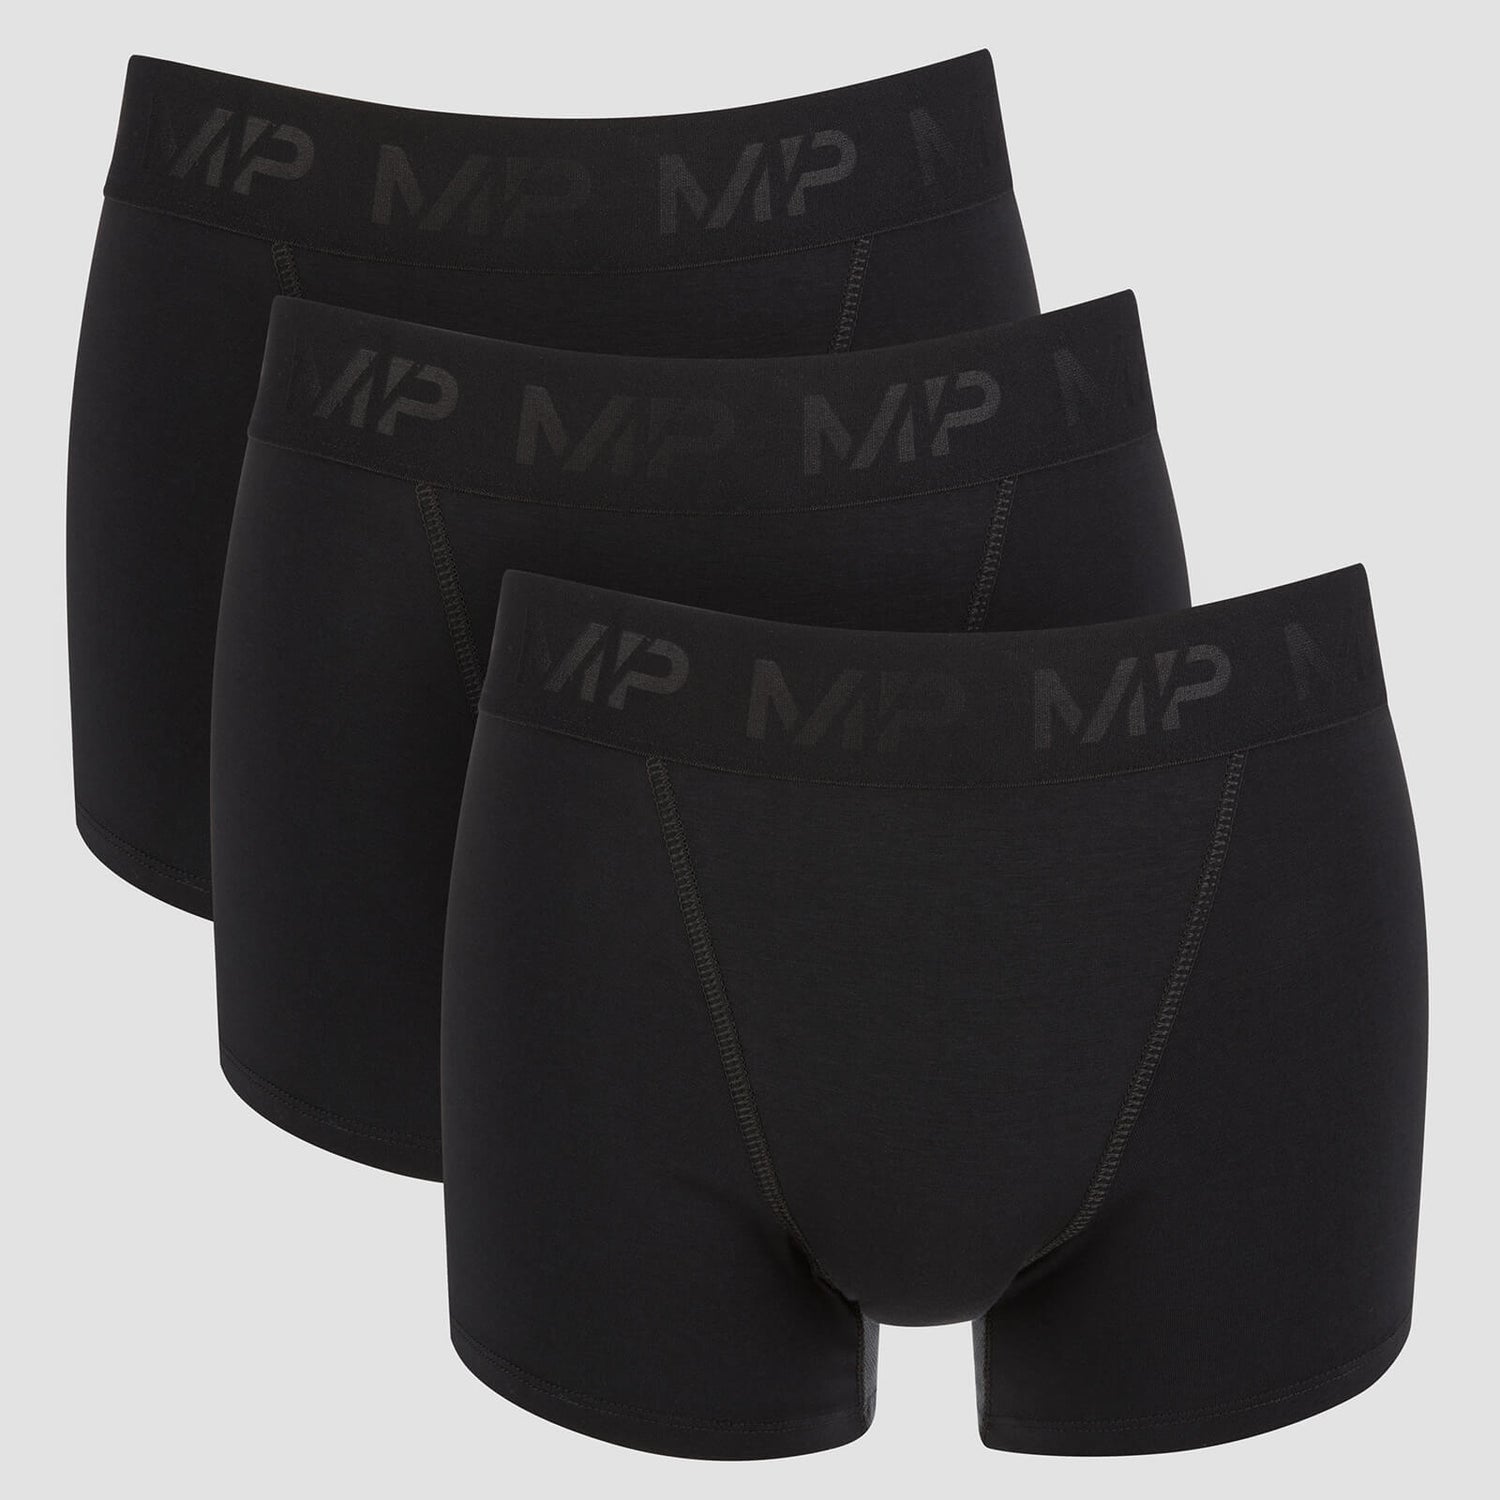 MP Men's Training Boxers - Black (3 Pack) - XL